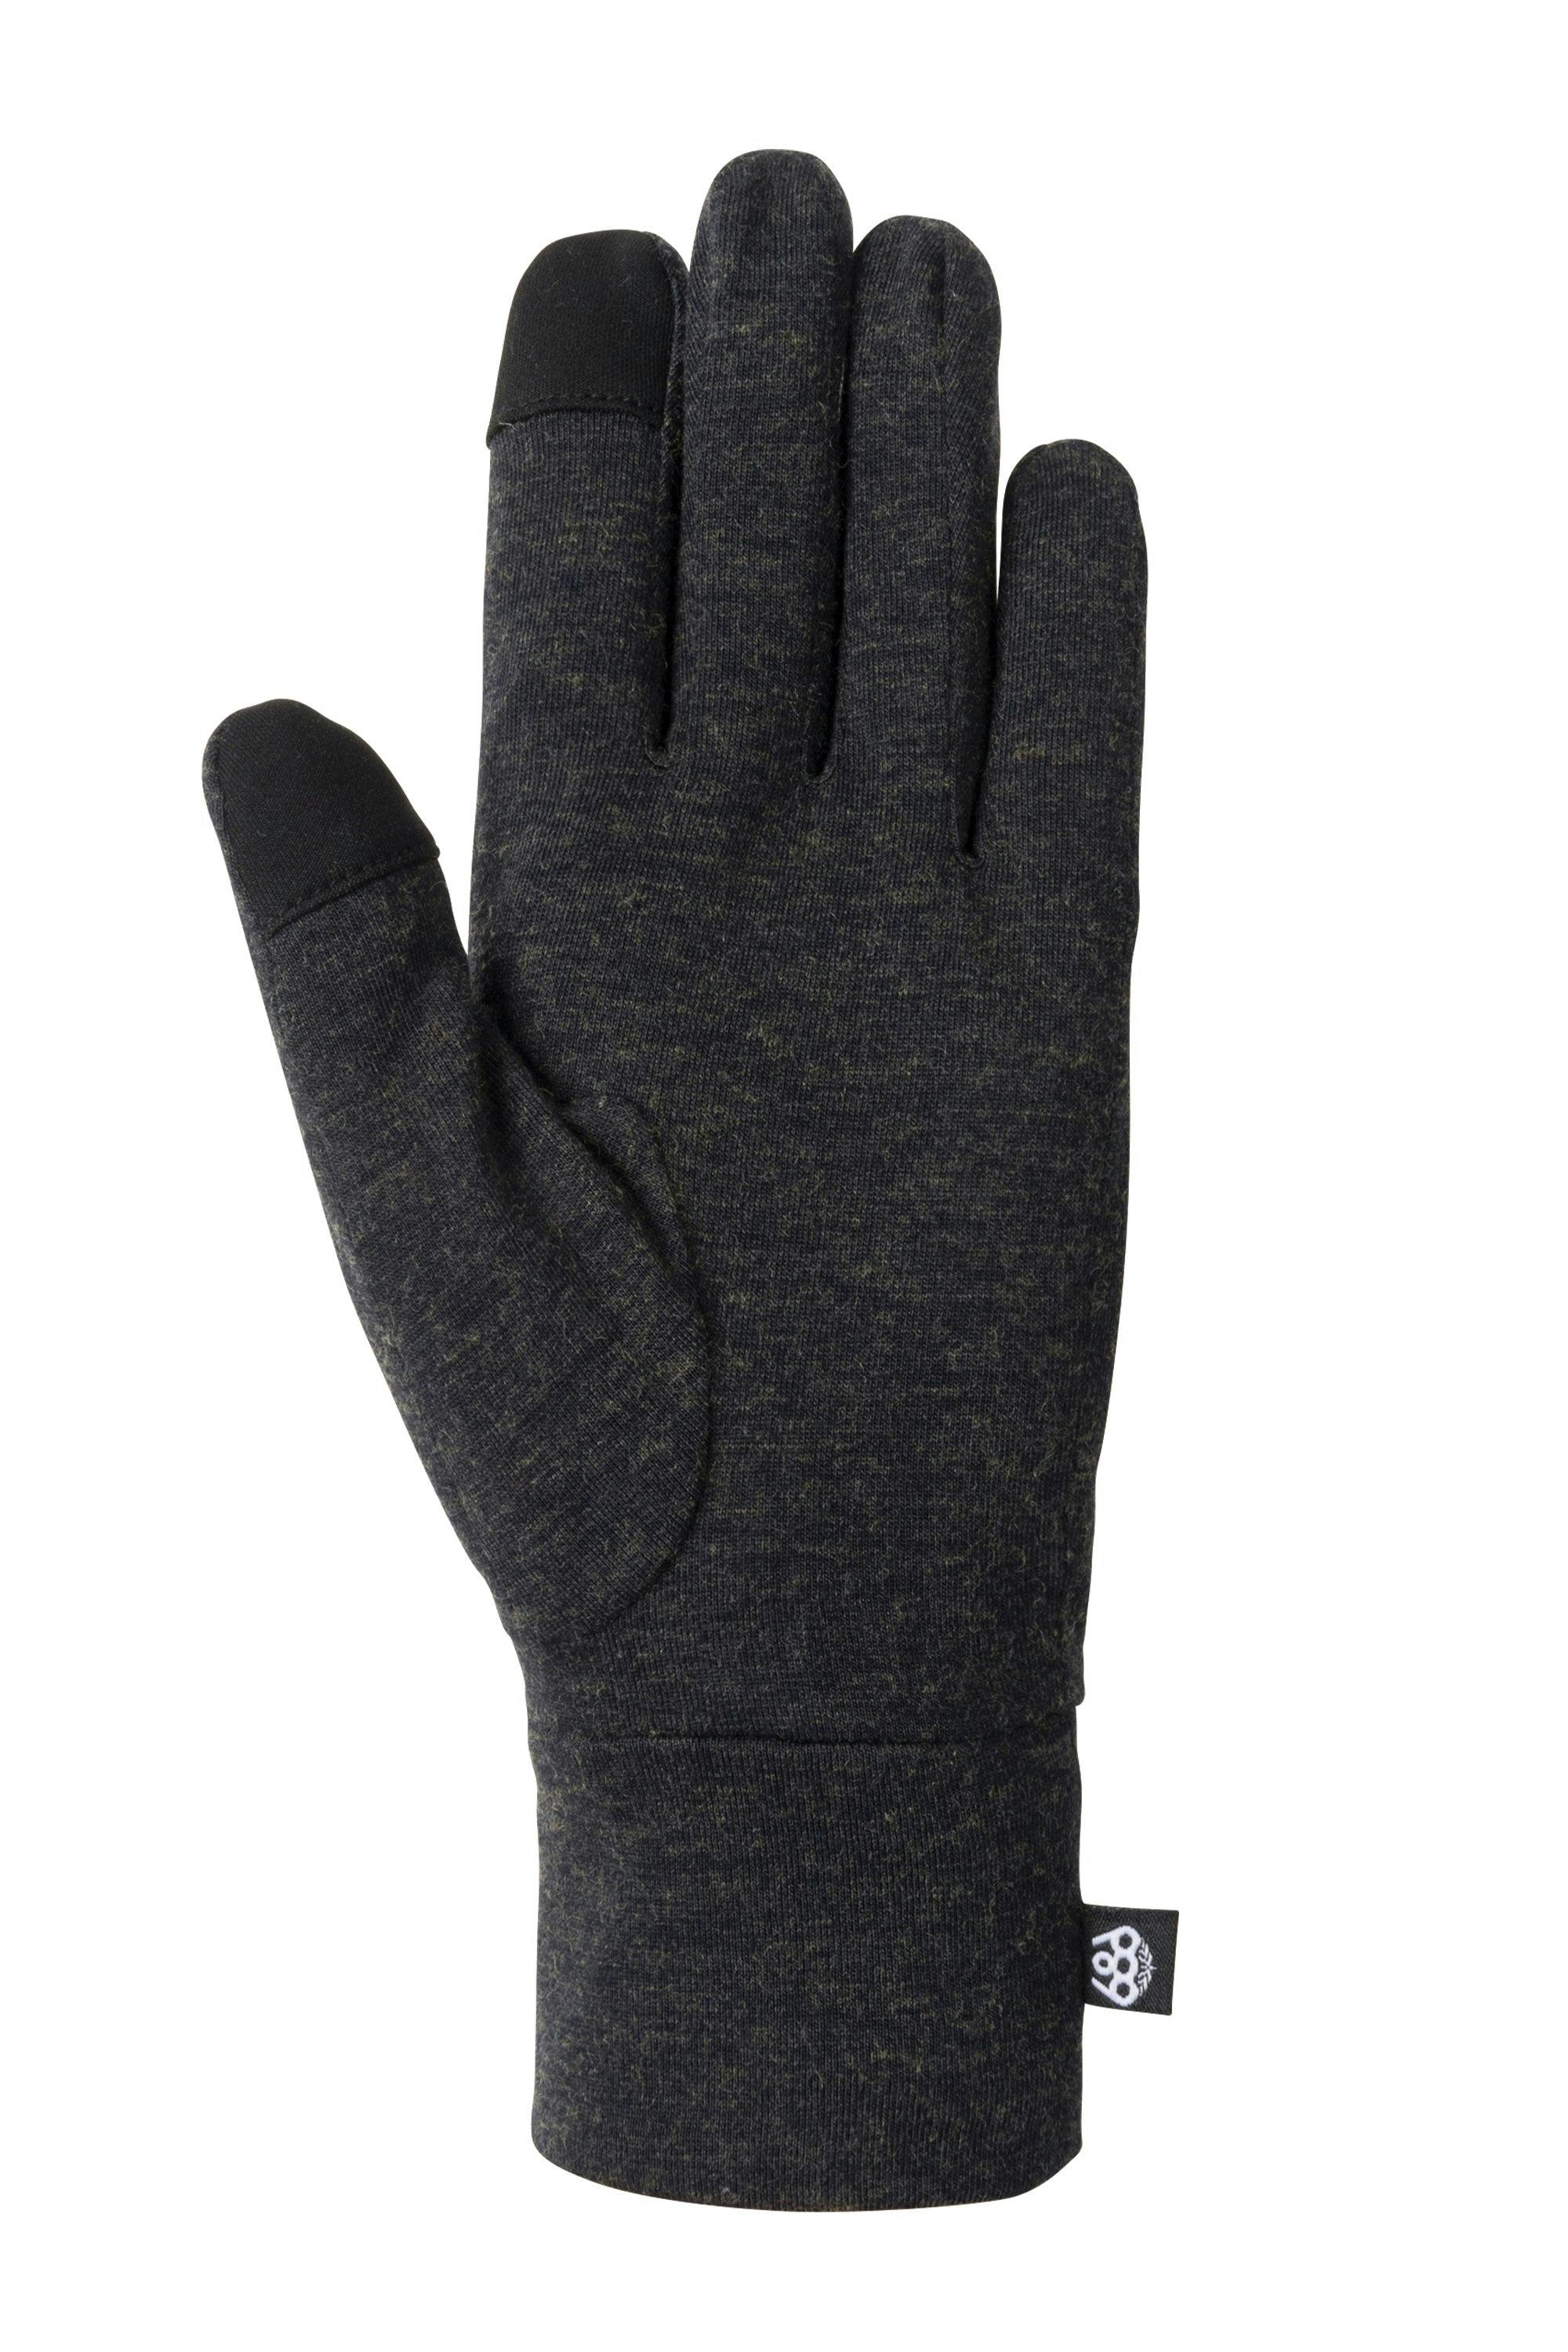 686 Women's Gore-Tex Smarty 3-In-1 Gauntlet Insulated Glove